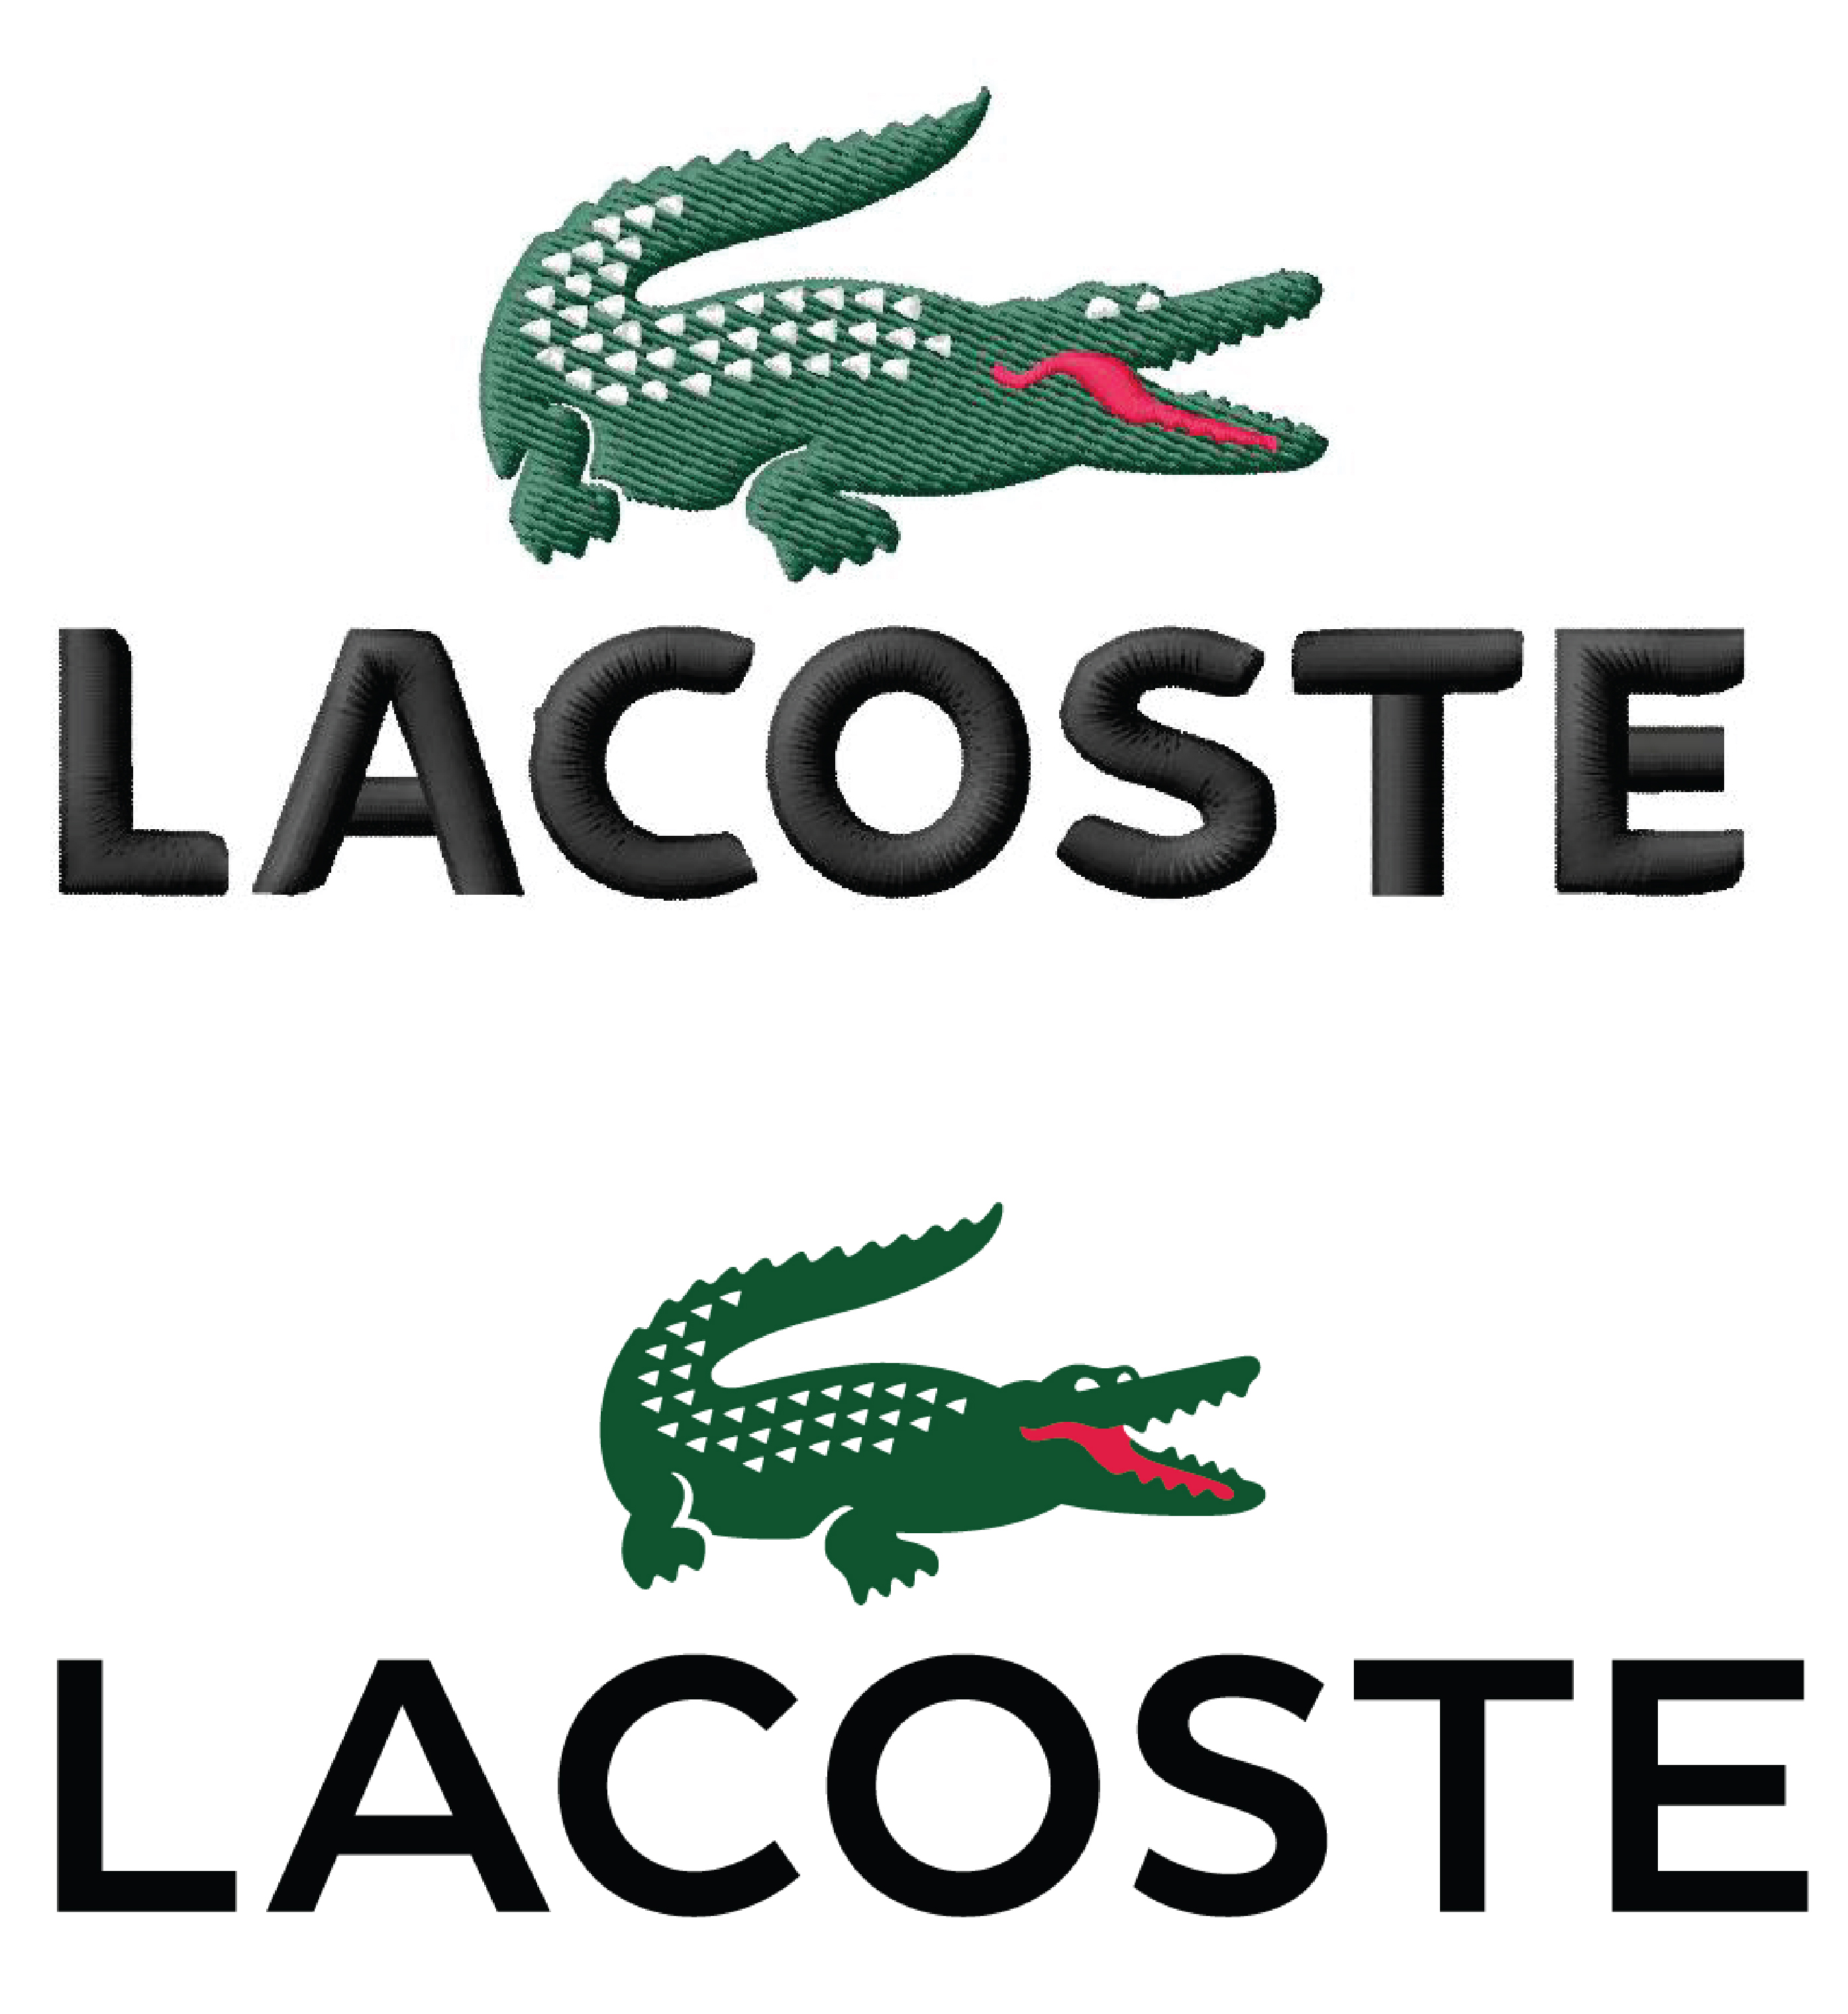 lacoste new logo